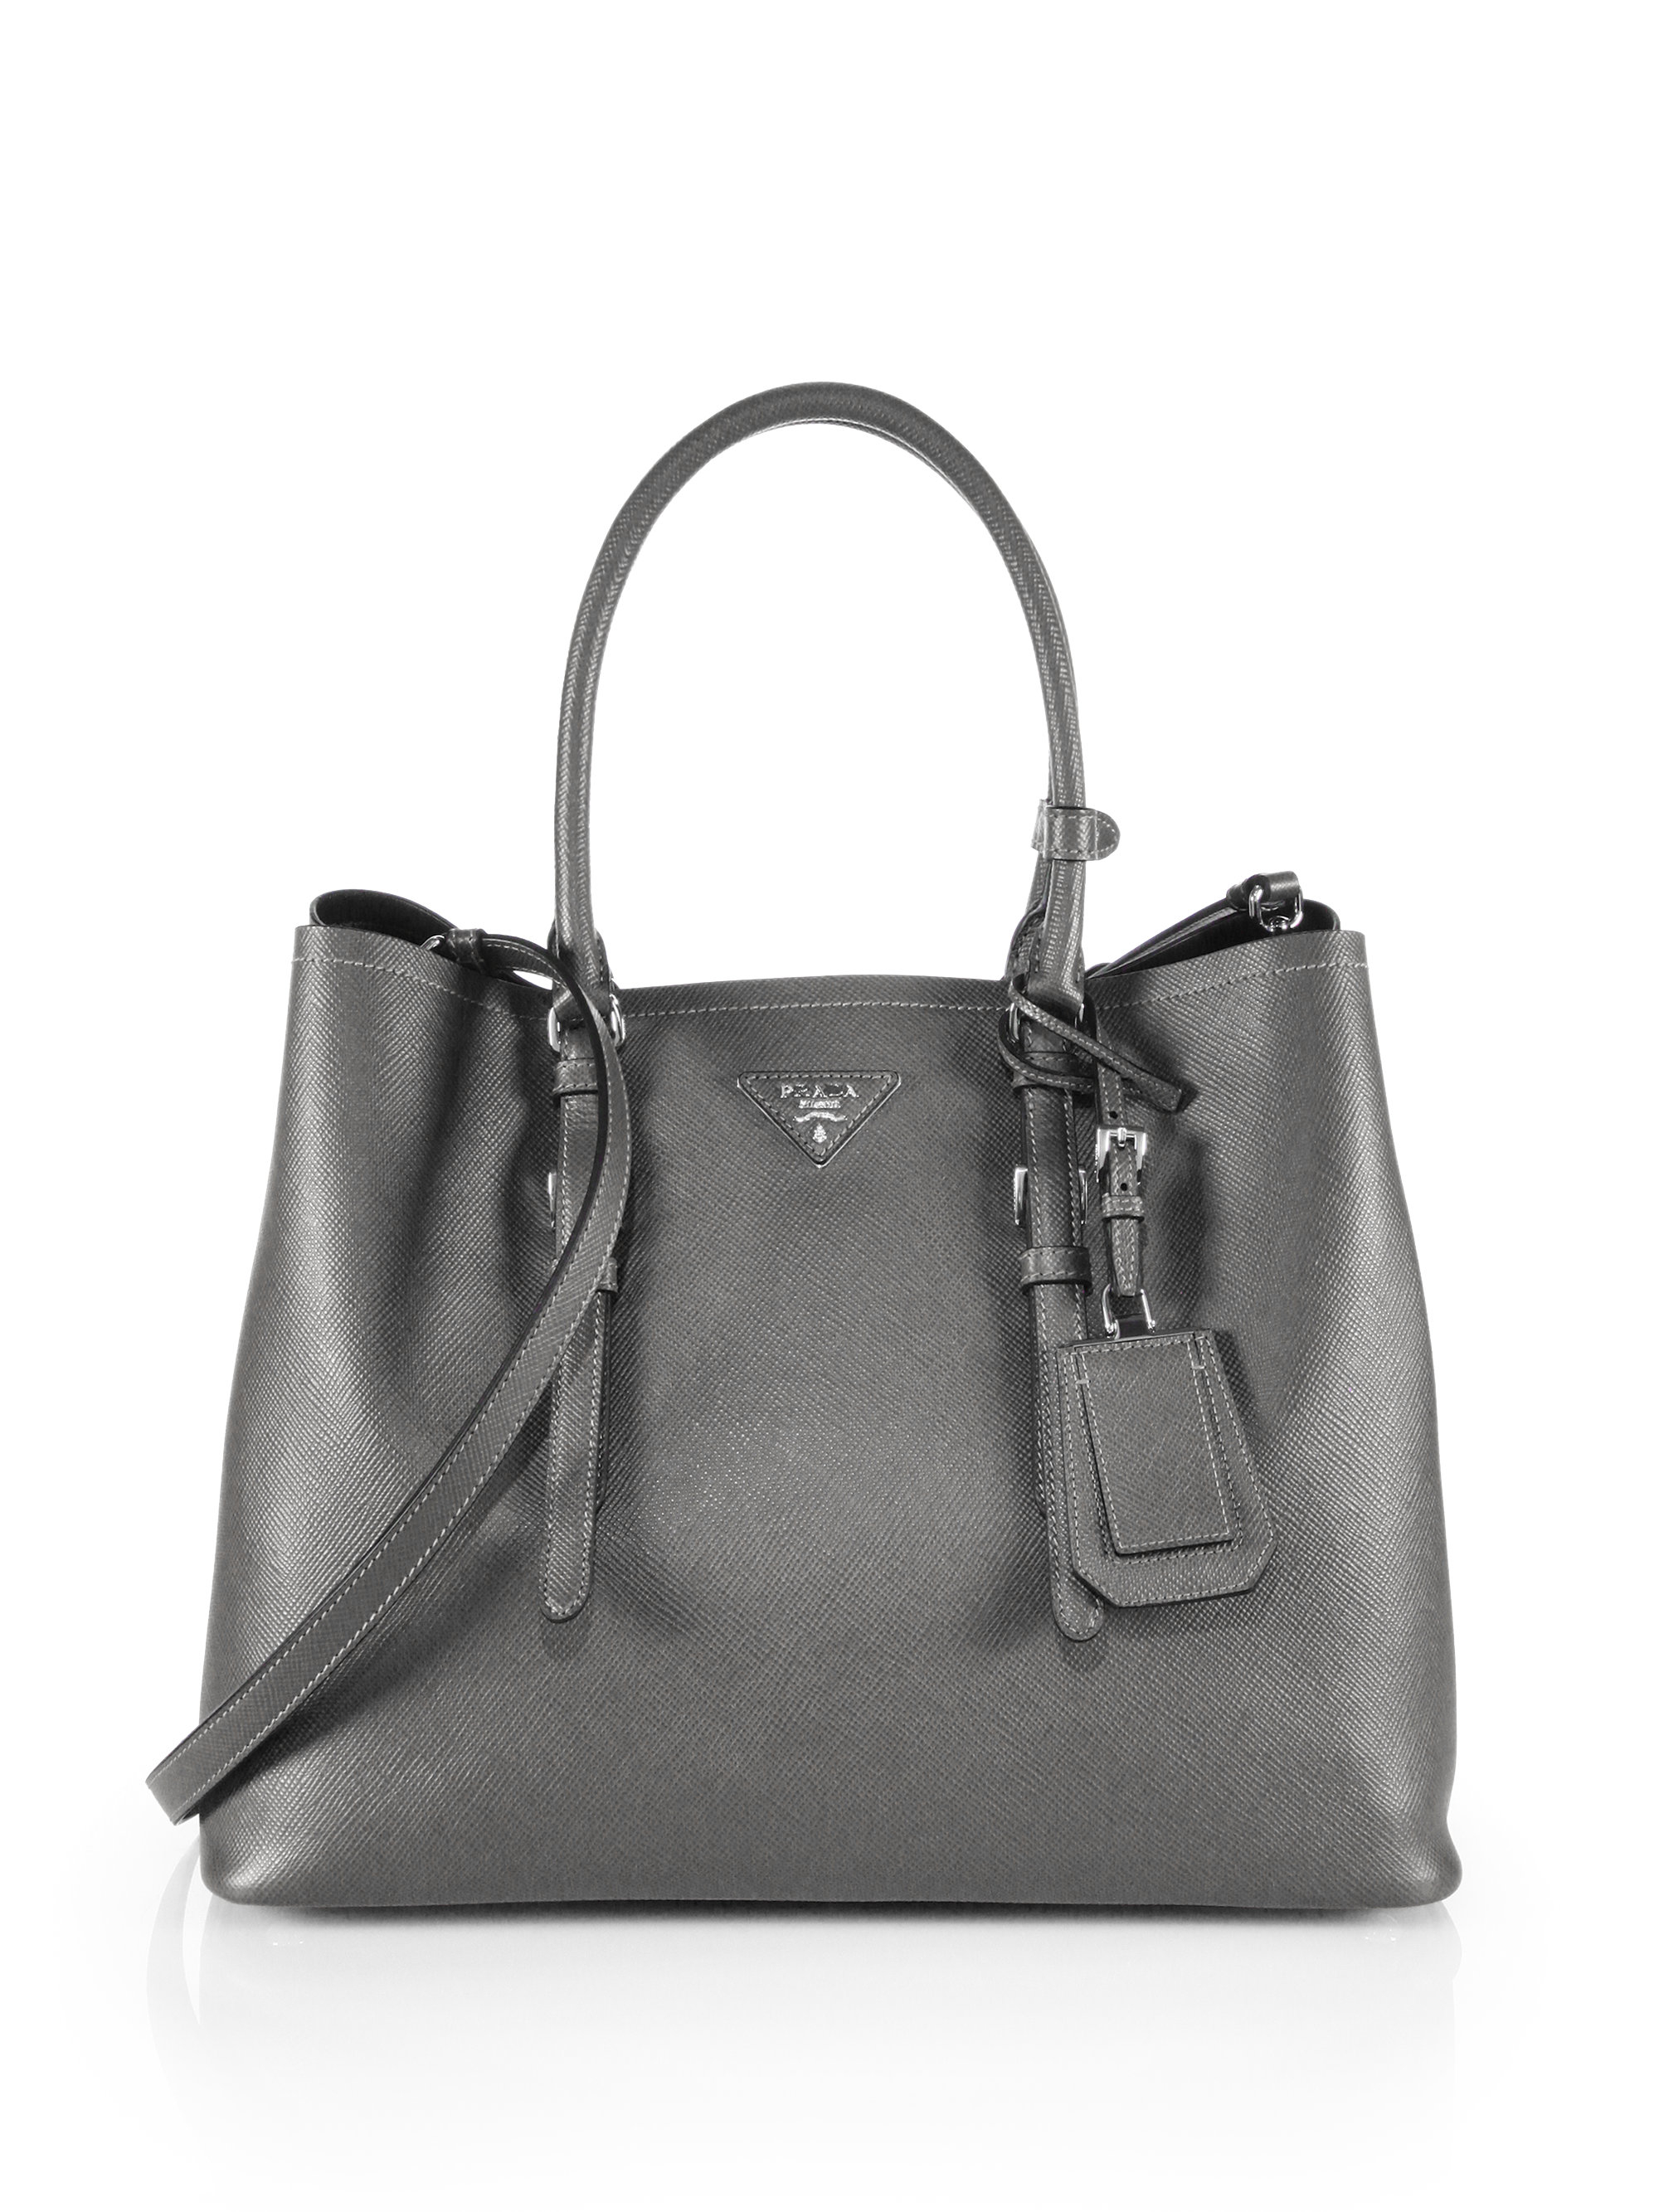 Prada Saffiano Cuir | Shop Prada Saffiano Cuir Bags on Lyst.com  